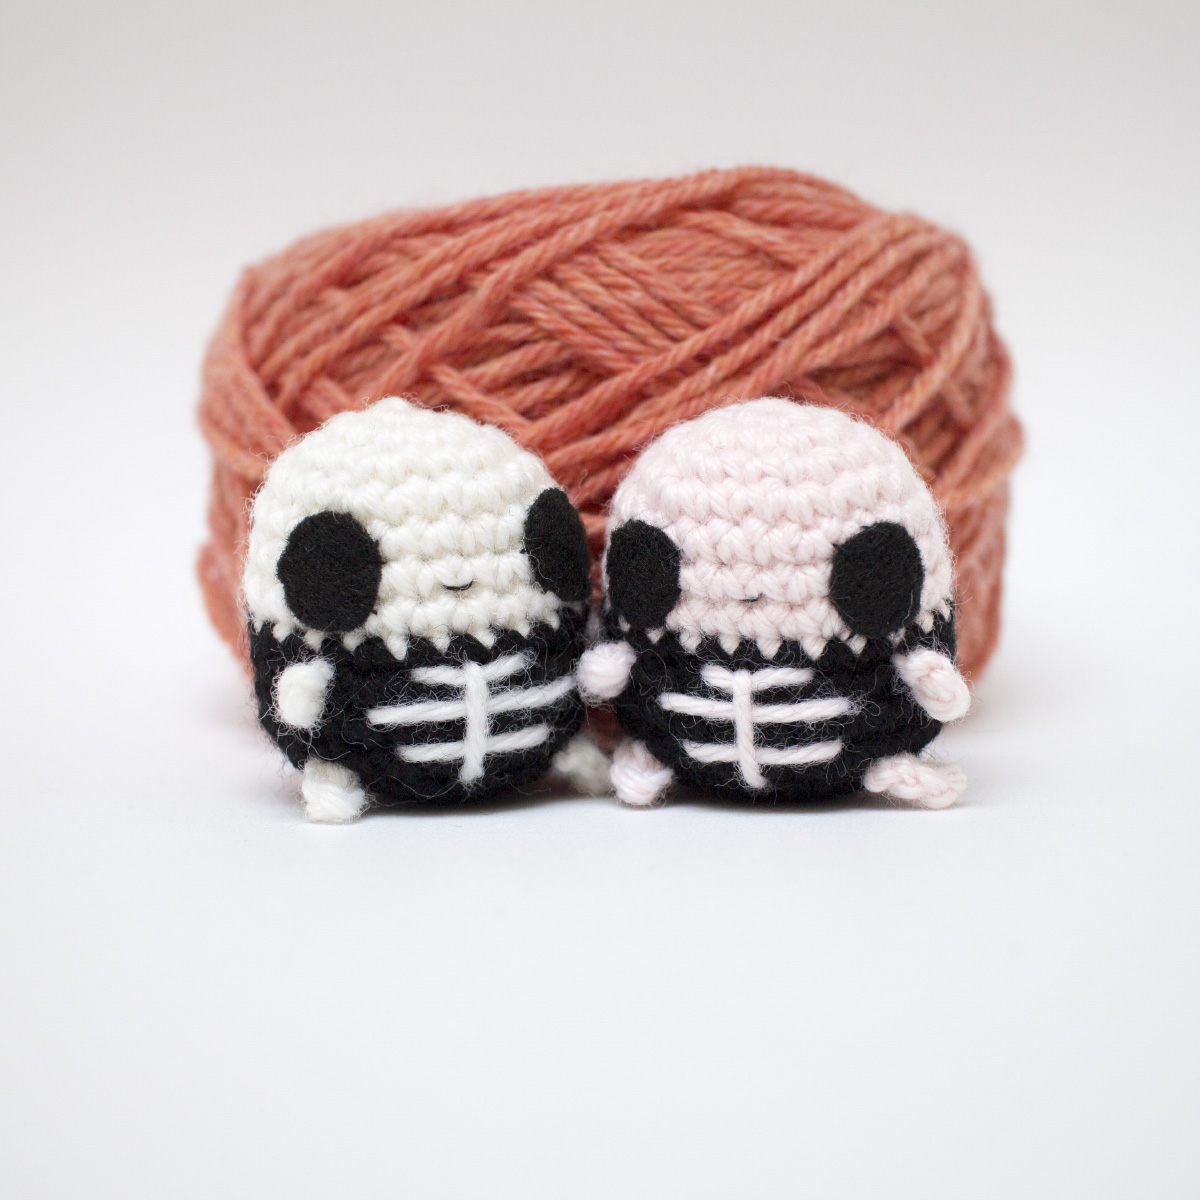 Crochet skeleton amigurumi pattern